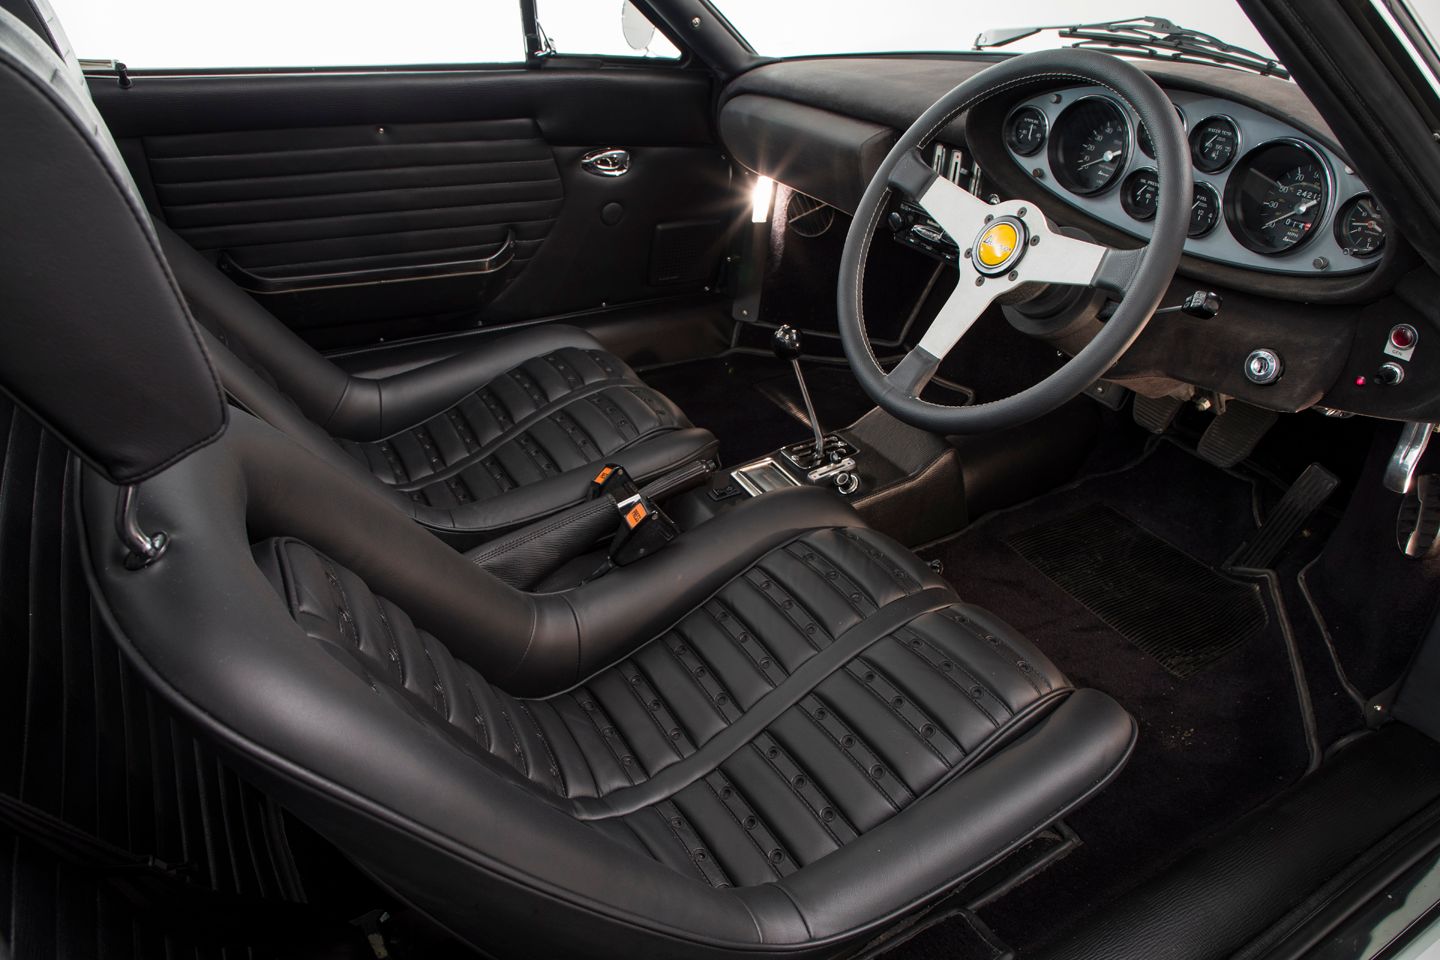 1967 - 1980 Ferrari Dino